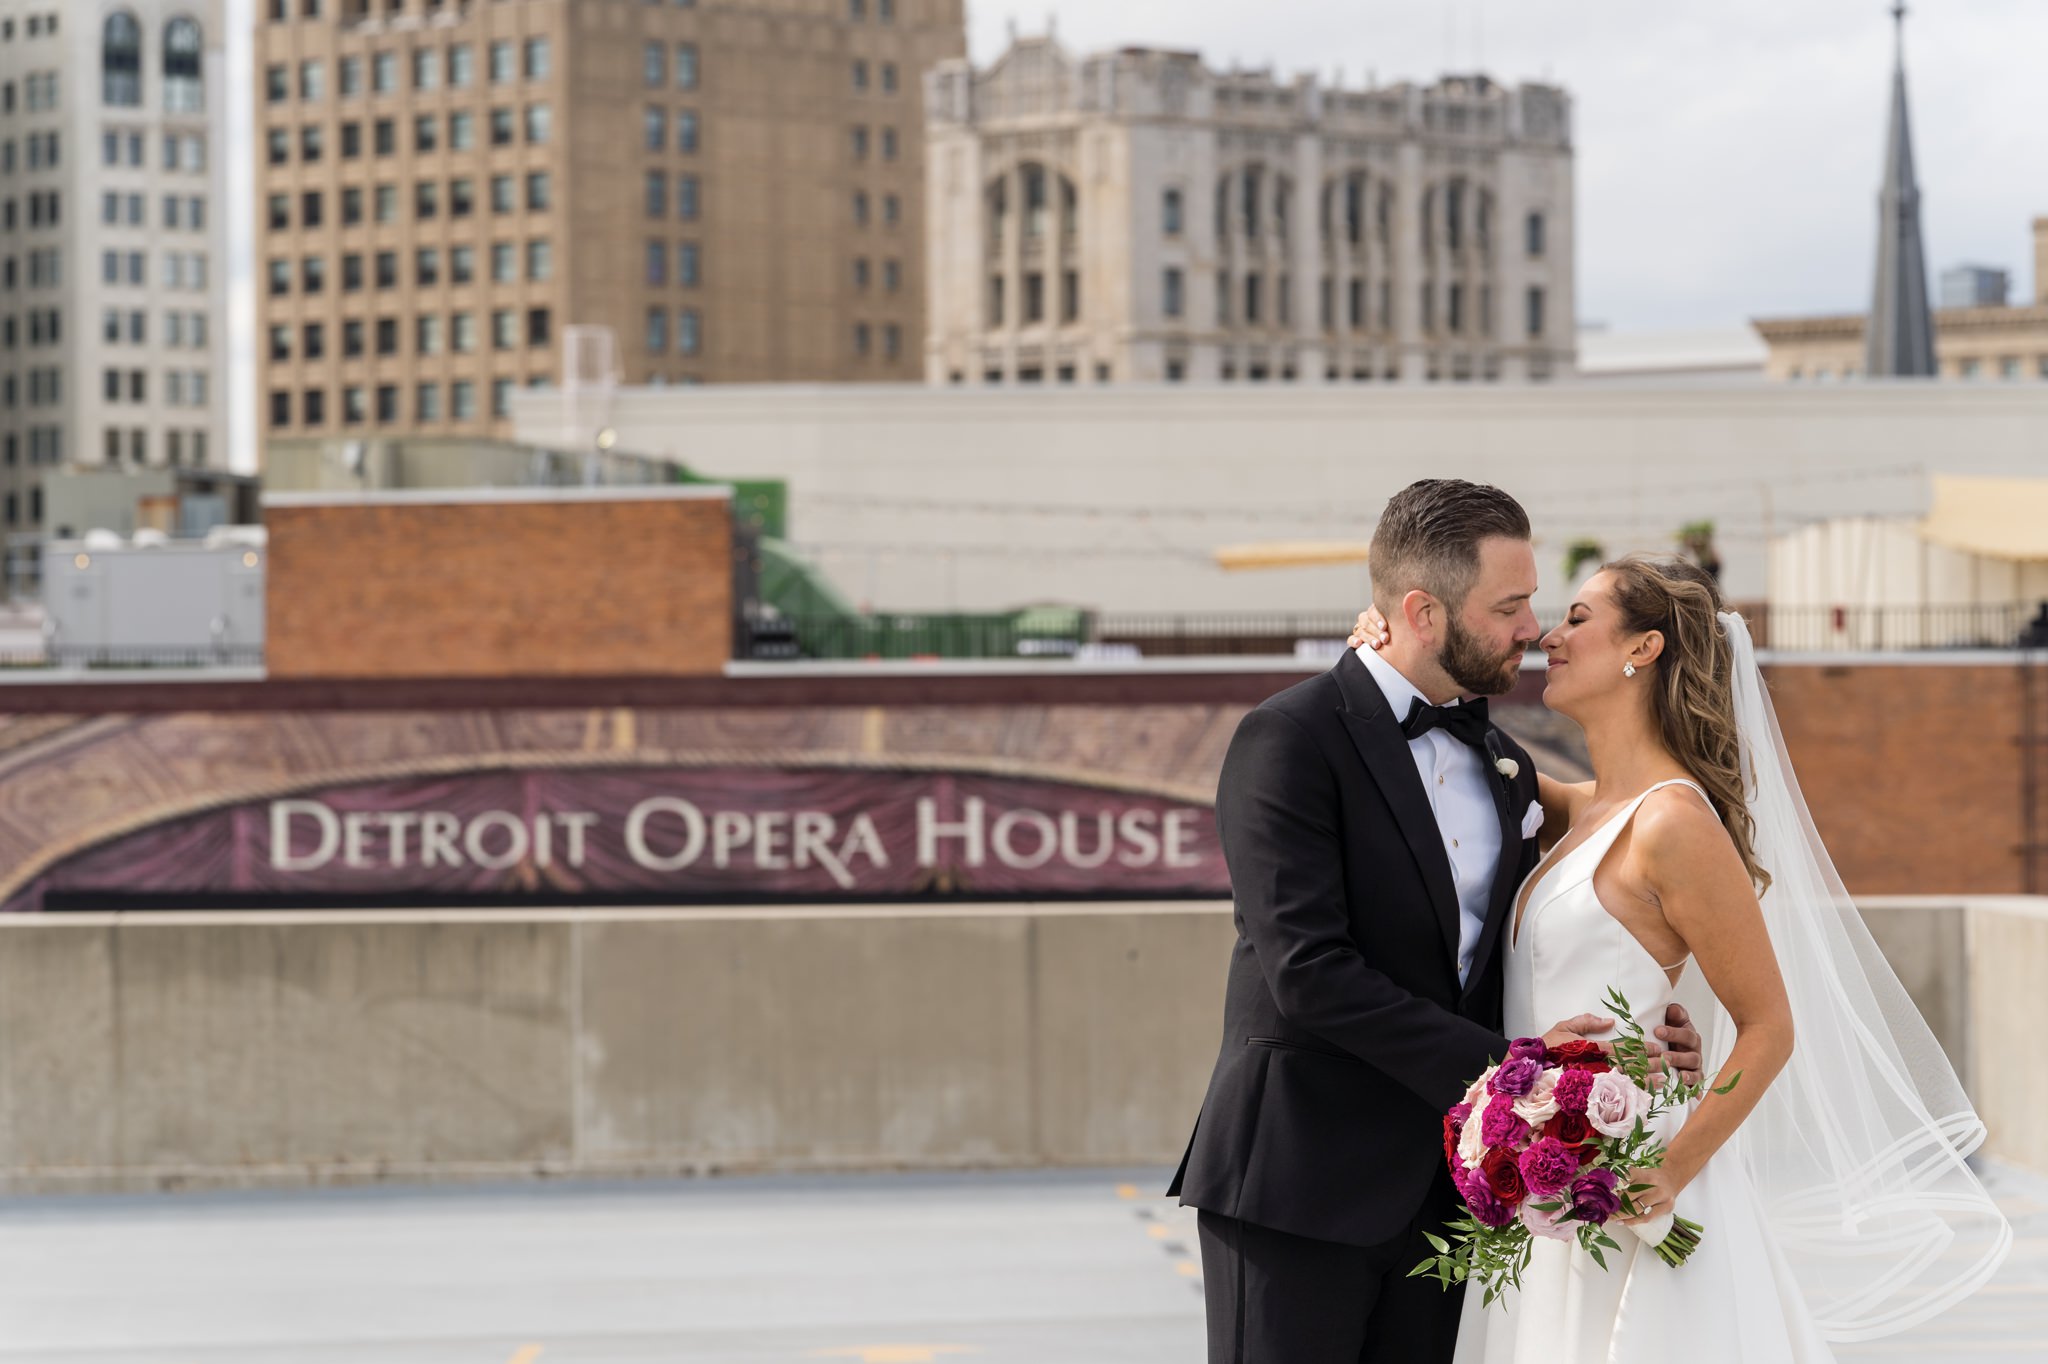 Detroit Opera House wedding